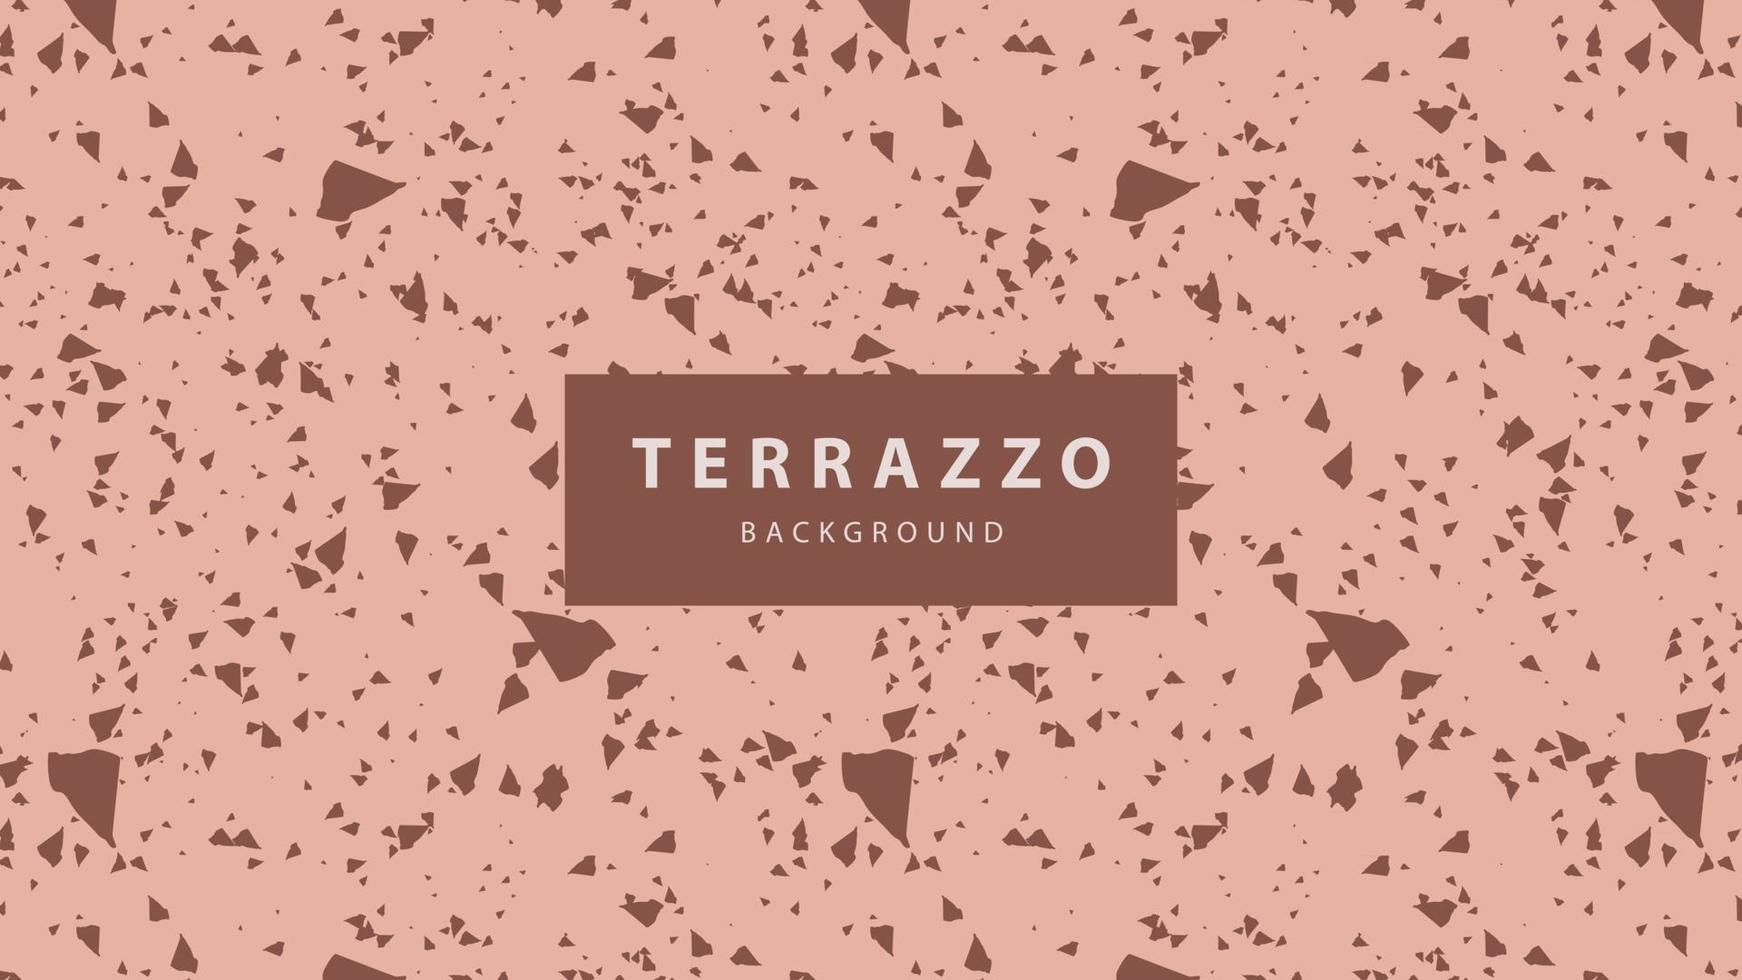 Terrazzo Bodentapete Hintergrund vektor